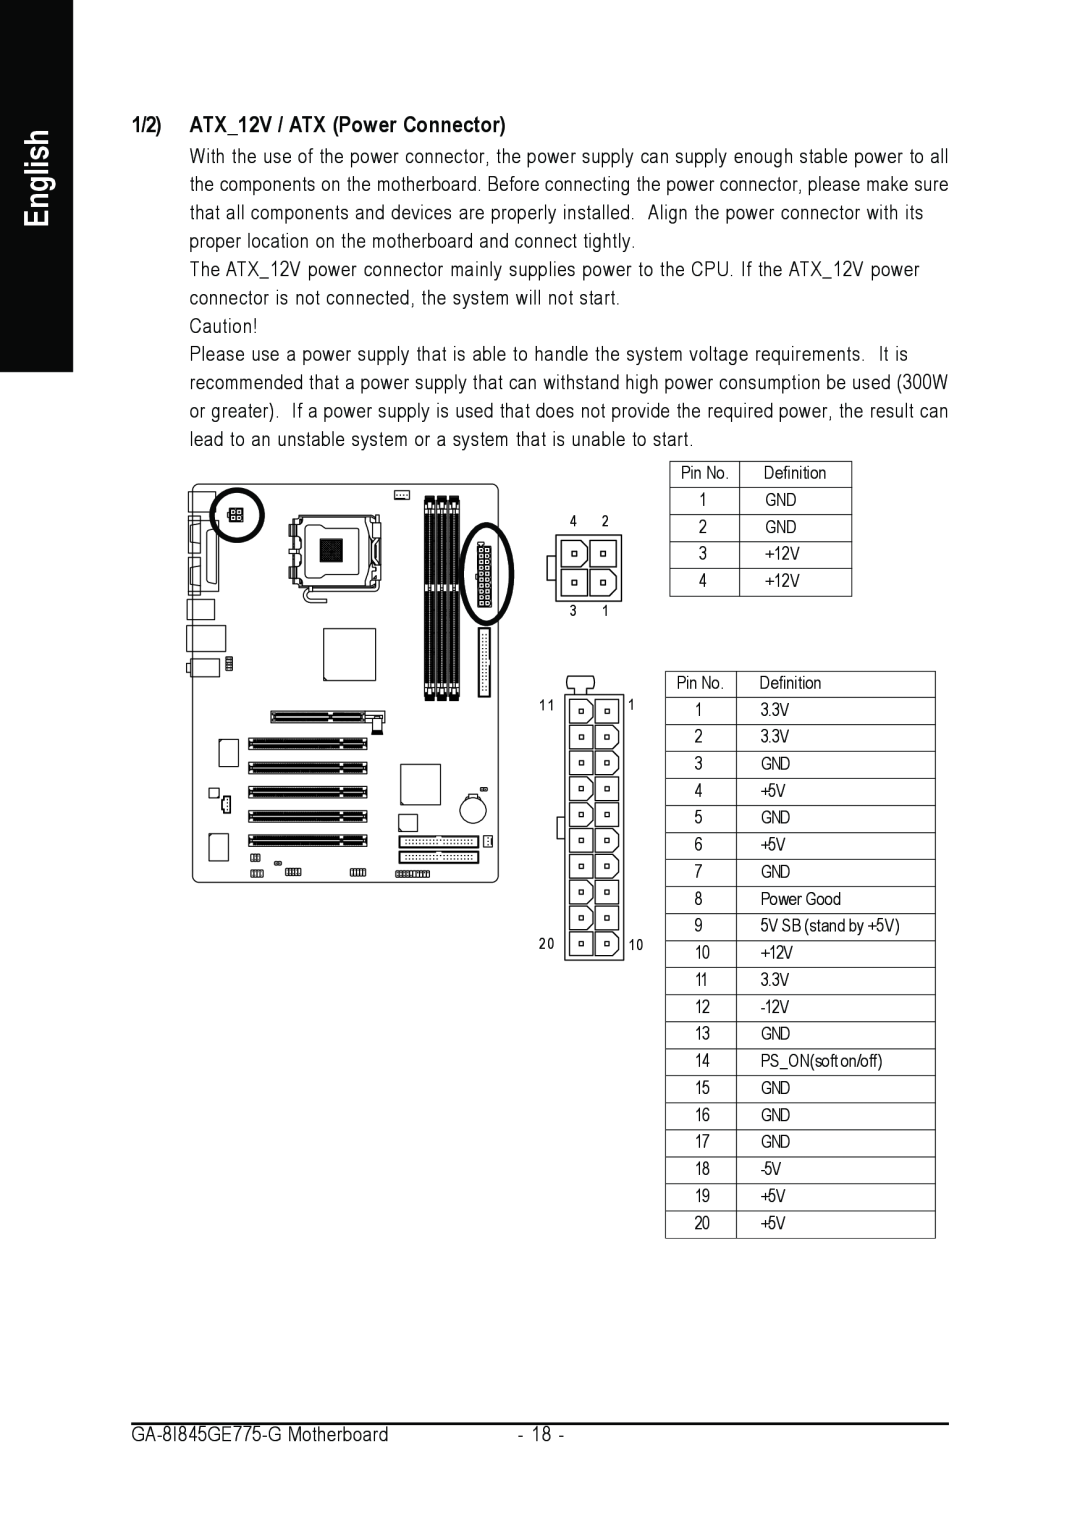 Gigabyte GA-8I845GE775-G user manual 1/2 ATX12V / ATX Power Connector, English, 111 2010, Pin No 